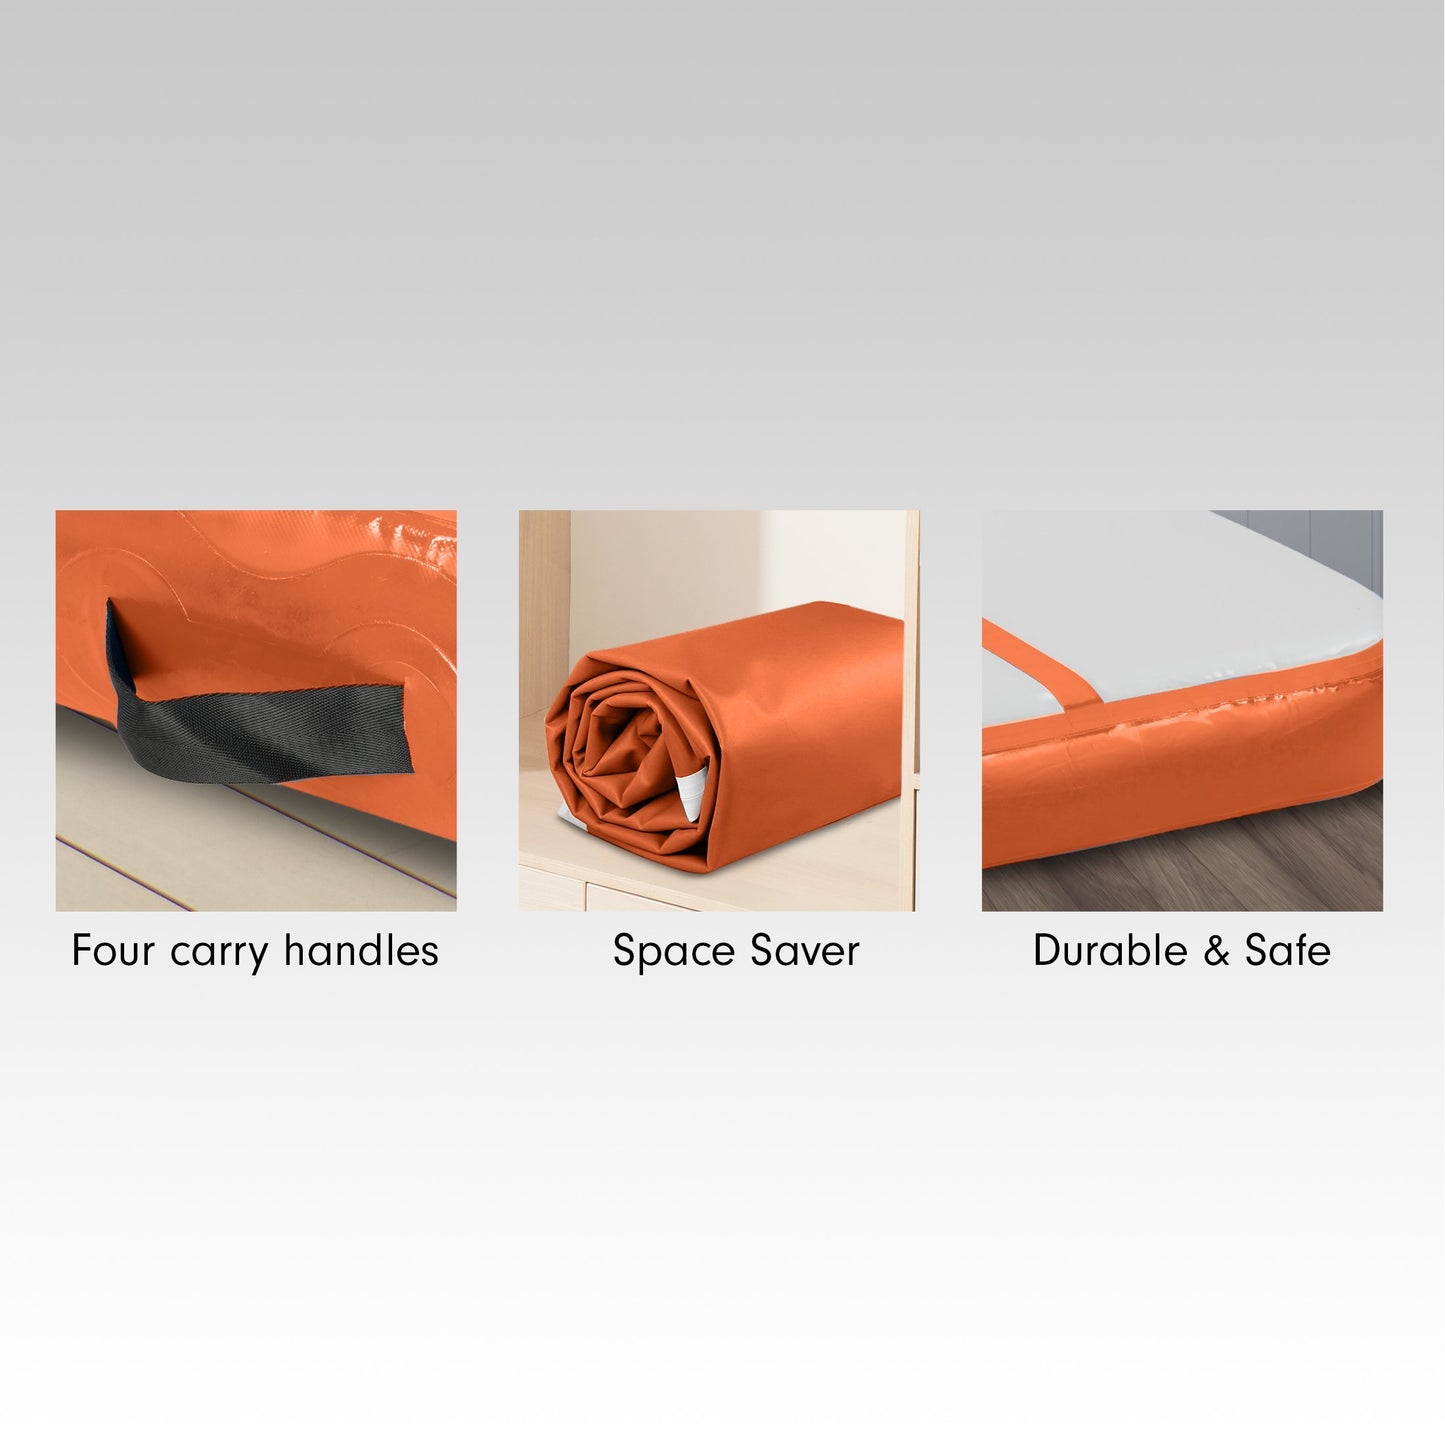 3m x 1m Air Track Inflatable Tumbling Mat Gymnastics - Orange Grey